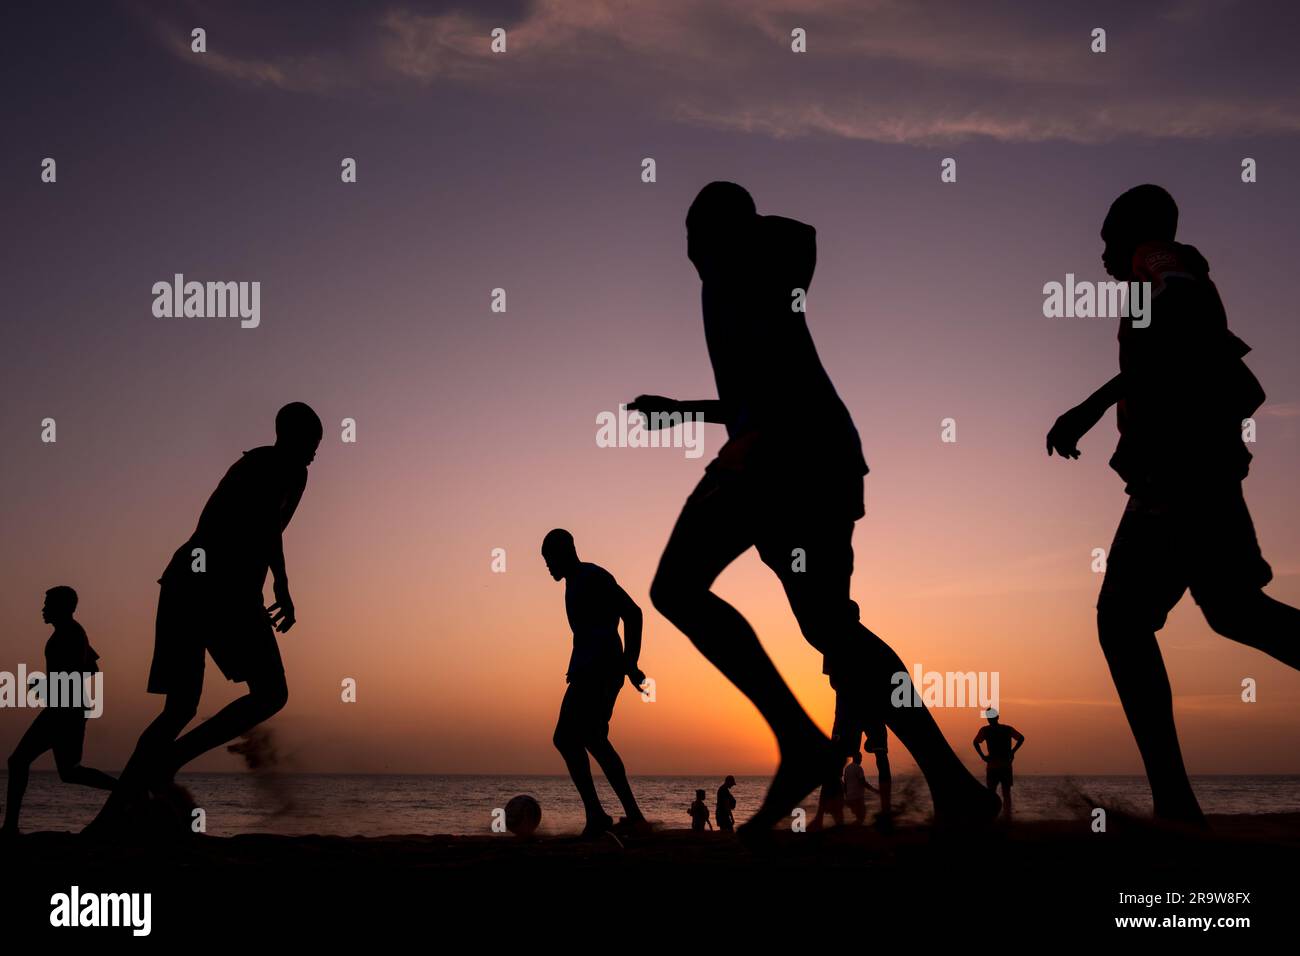 Football players at sunset on a beach in Dakar, Senegal Stock Photo